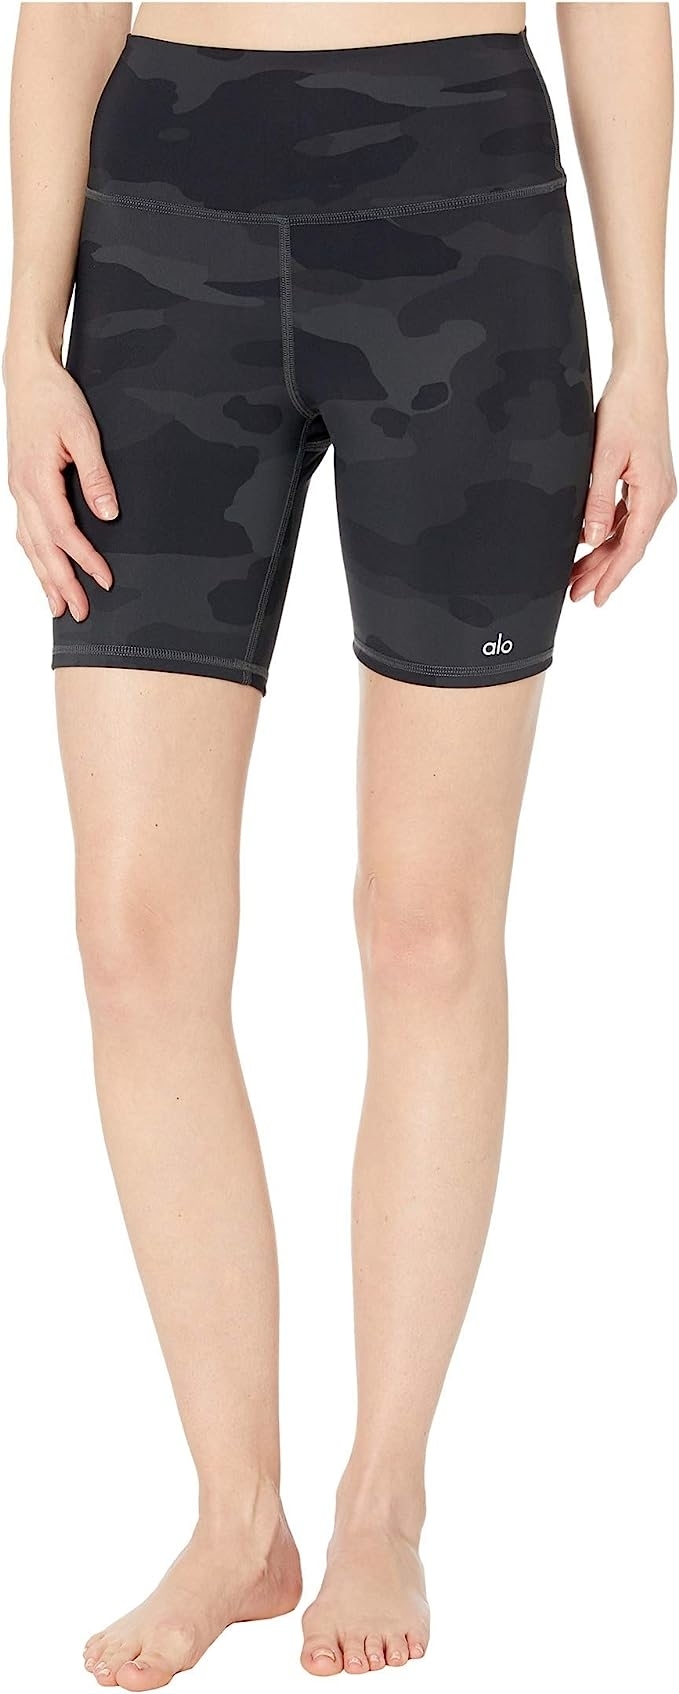 model wearing black camo print biker shorts